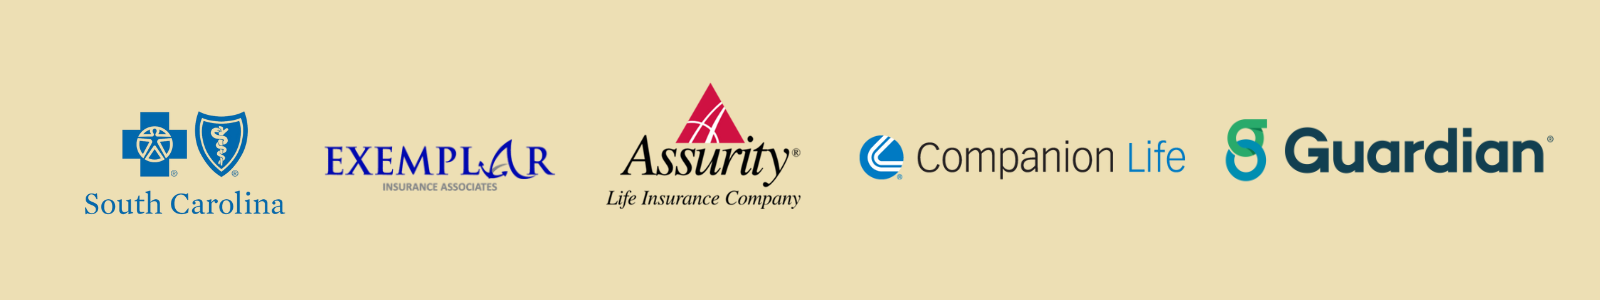 BCBS, Exemplar, Assurity, Companion Life Insurance Logos